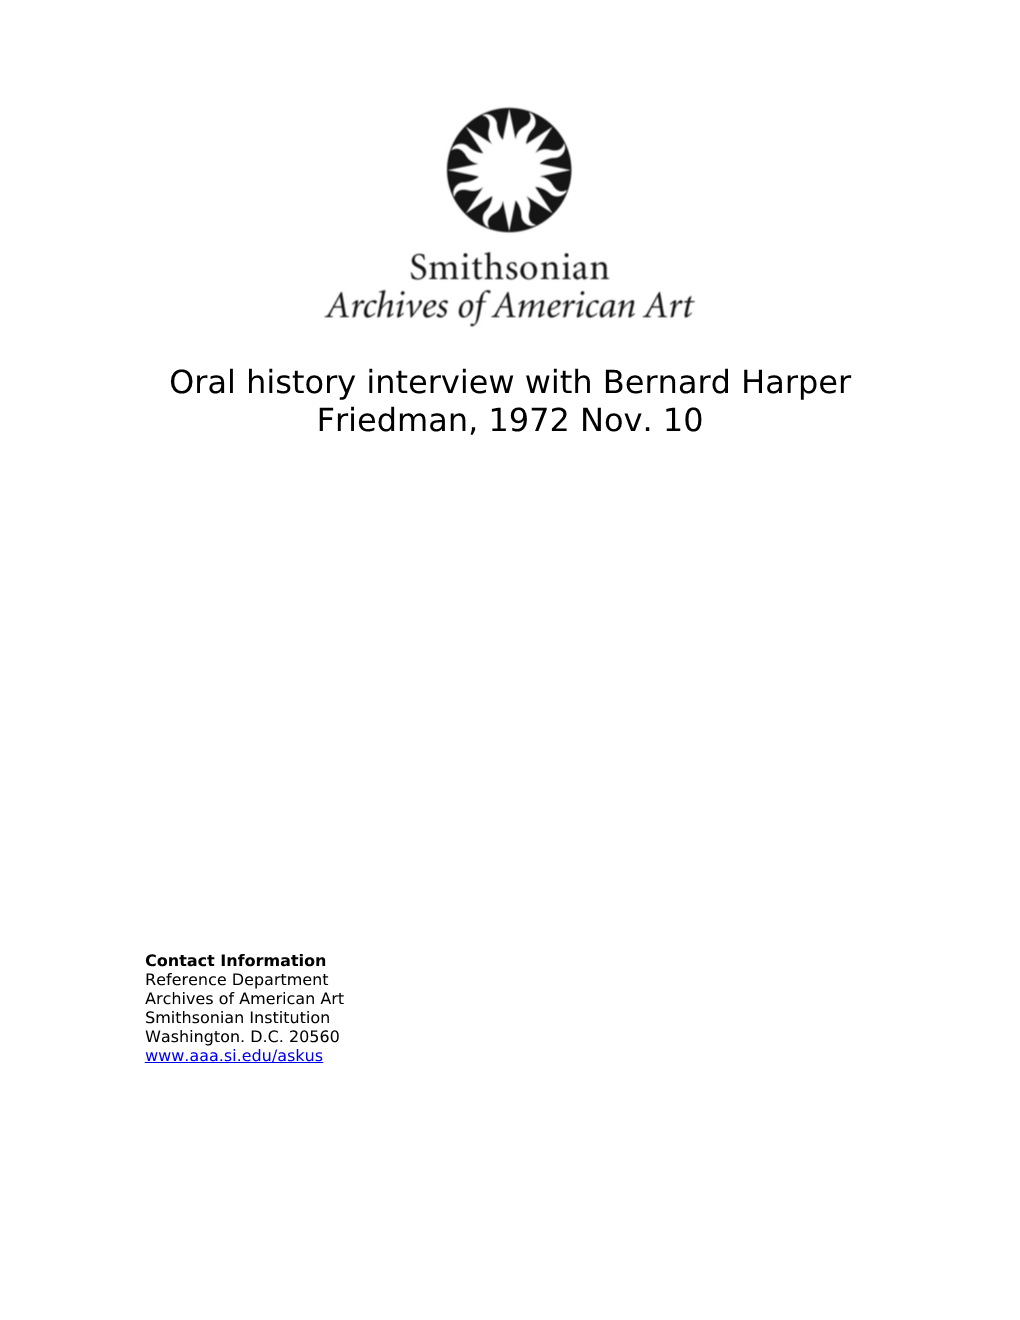 Oral History Interview with Bernard Harper Friedman, 1972 Nov. 10